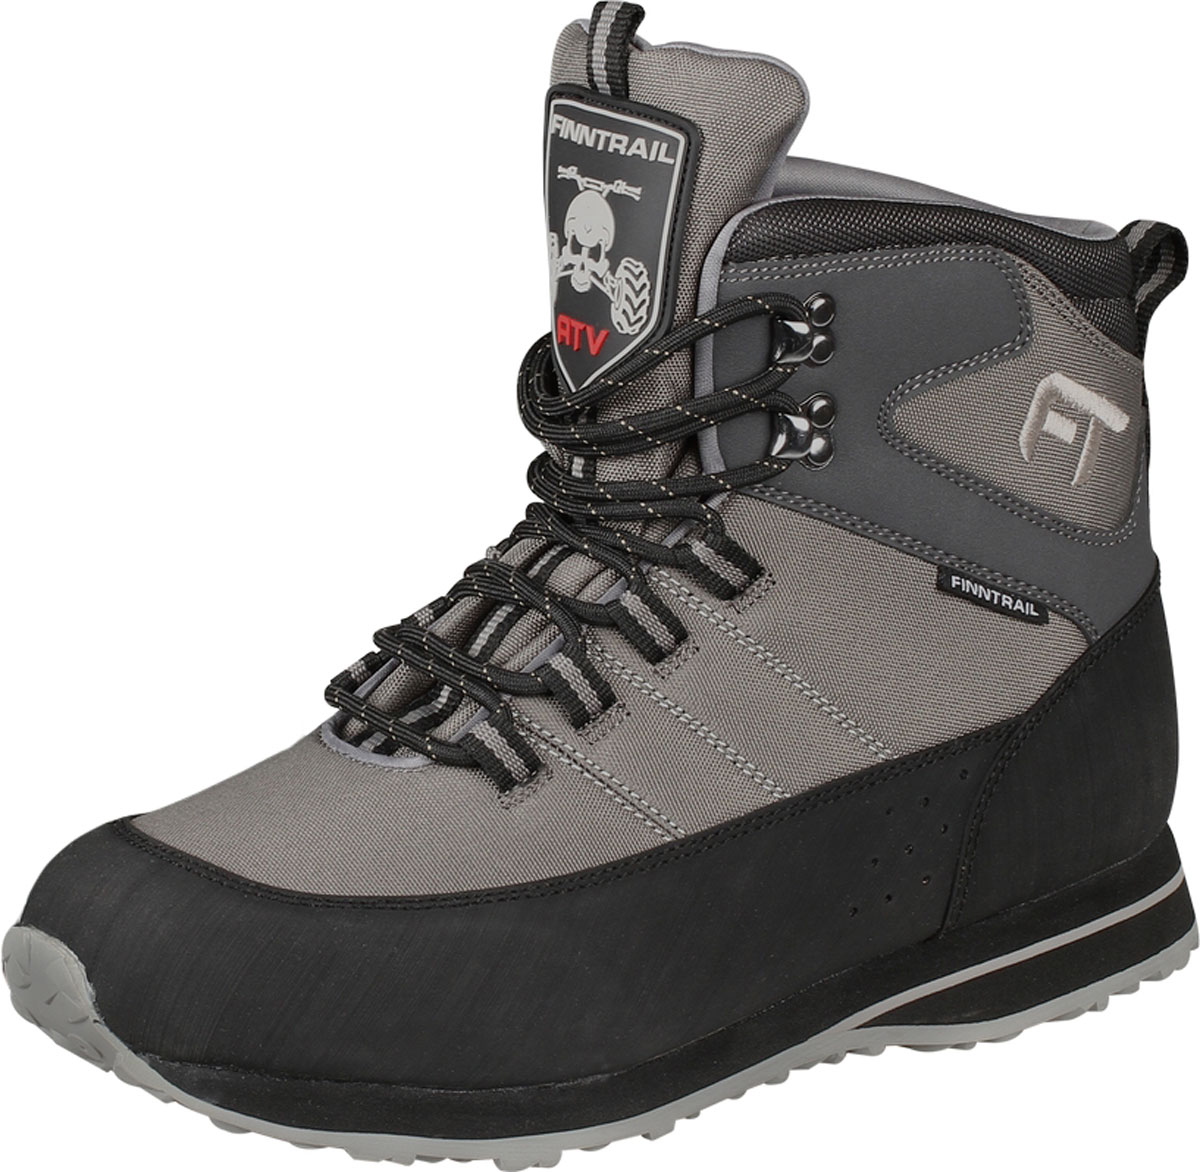 Ботинки для рыбалки Finntrail New Stalker, цвет: серый, черный. 5192. Размер 44